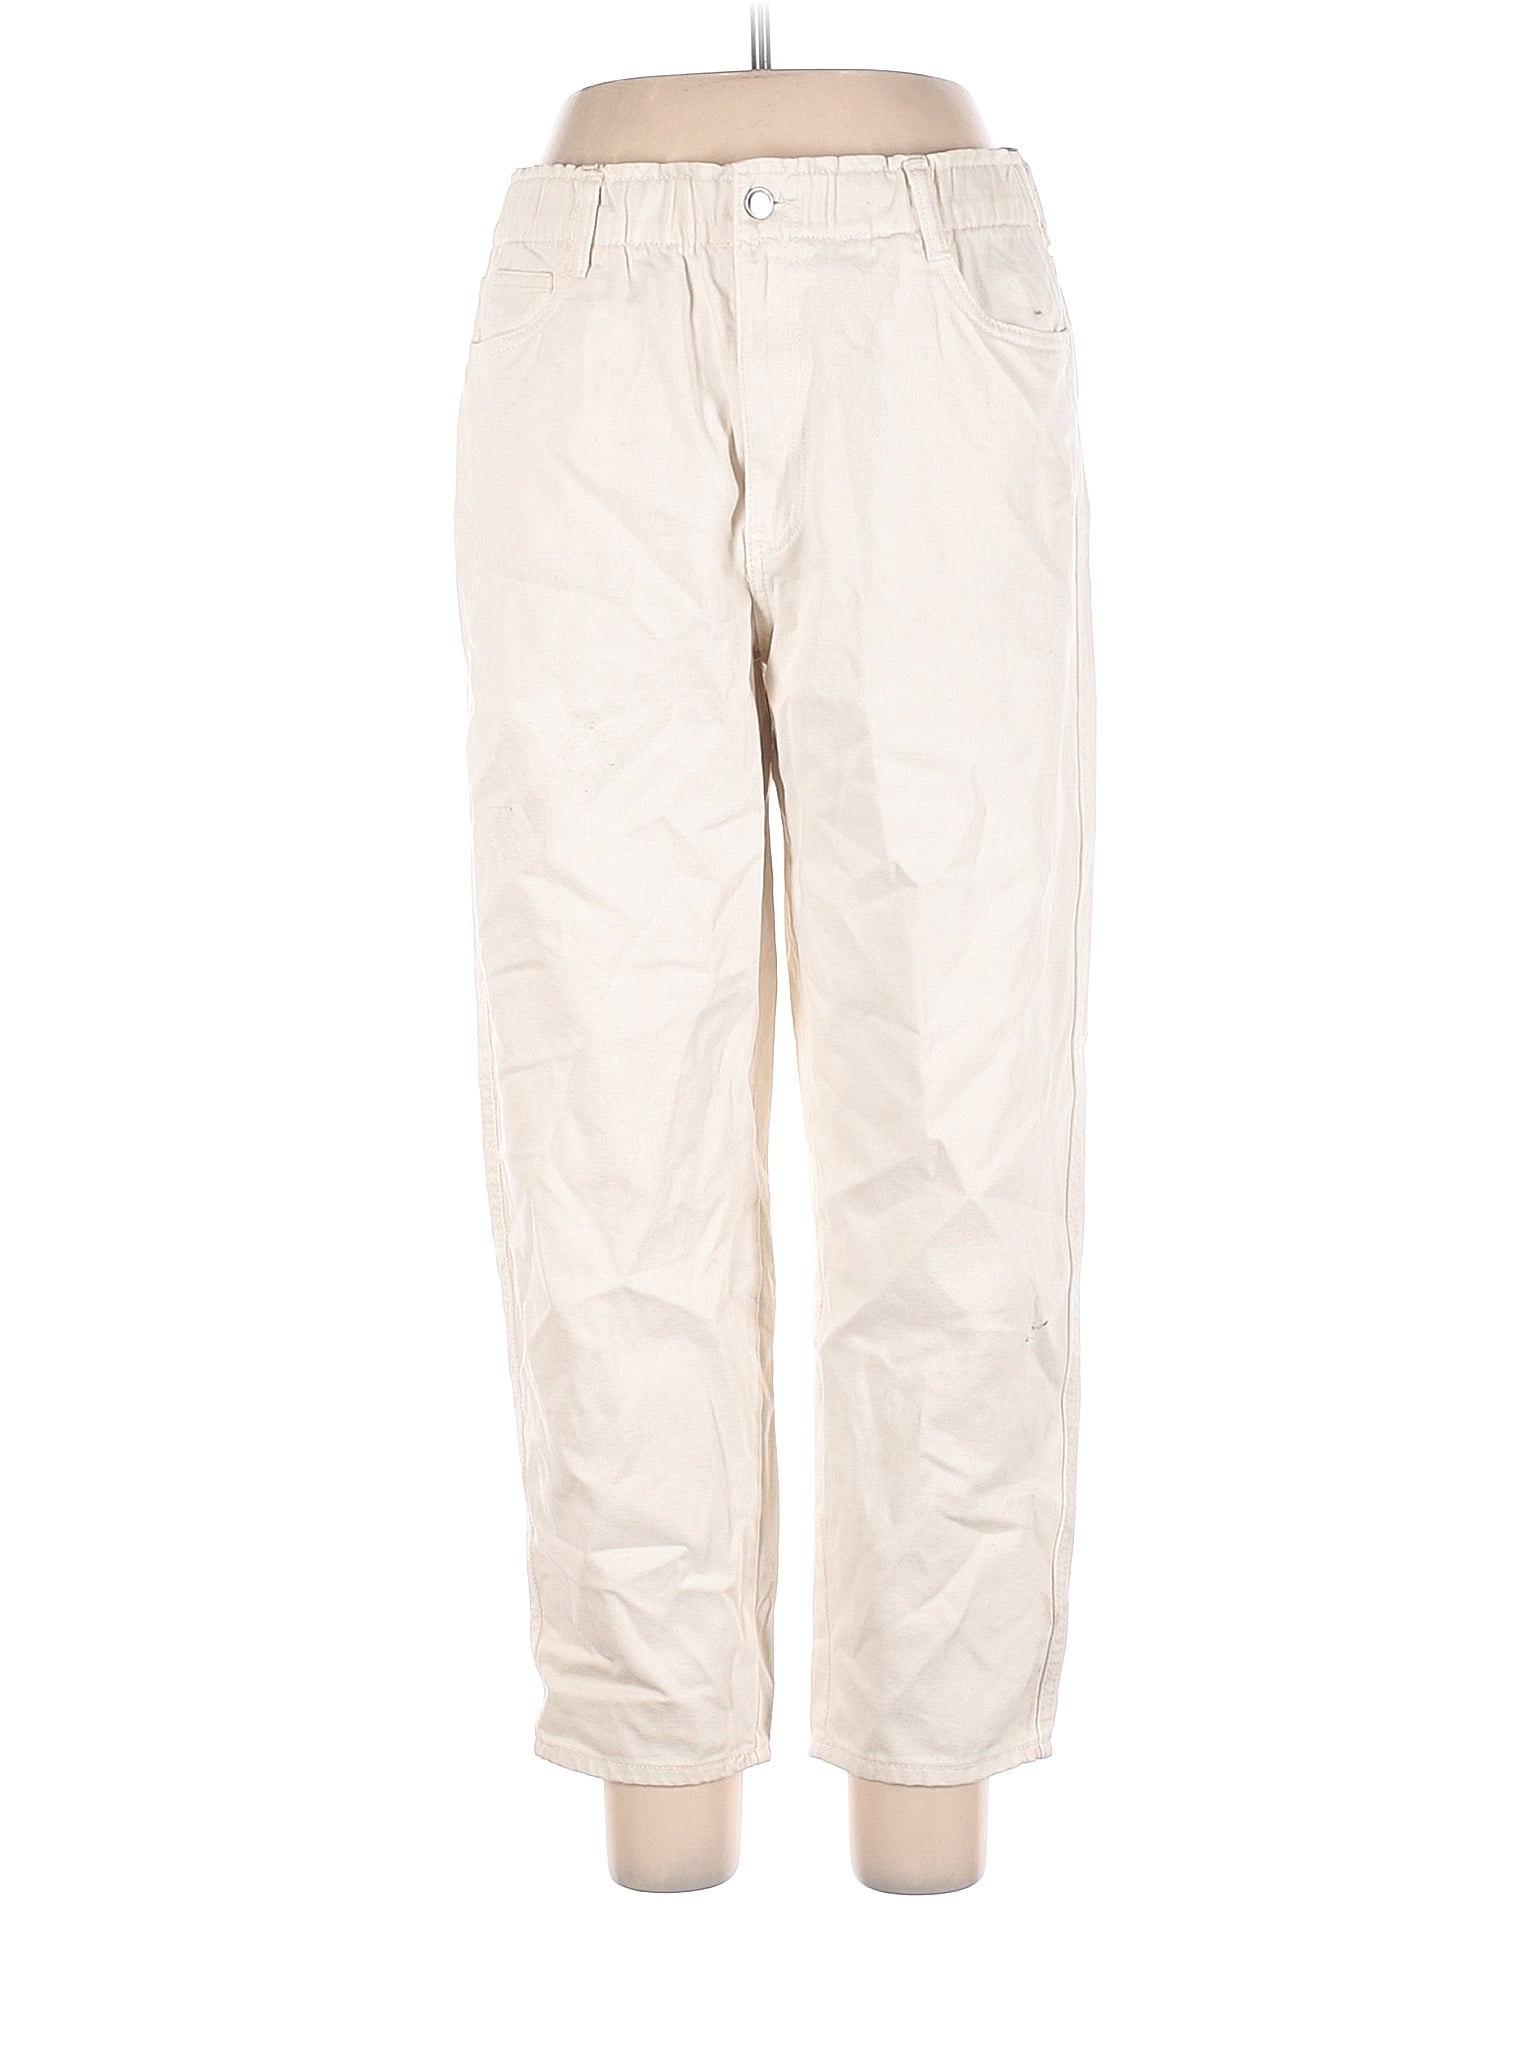 H&M 100% Cotton White Jeans Size 12 - 41% off | thredUP